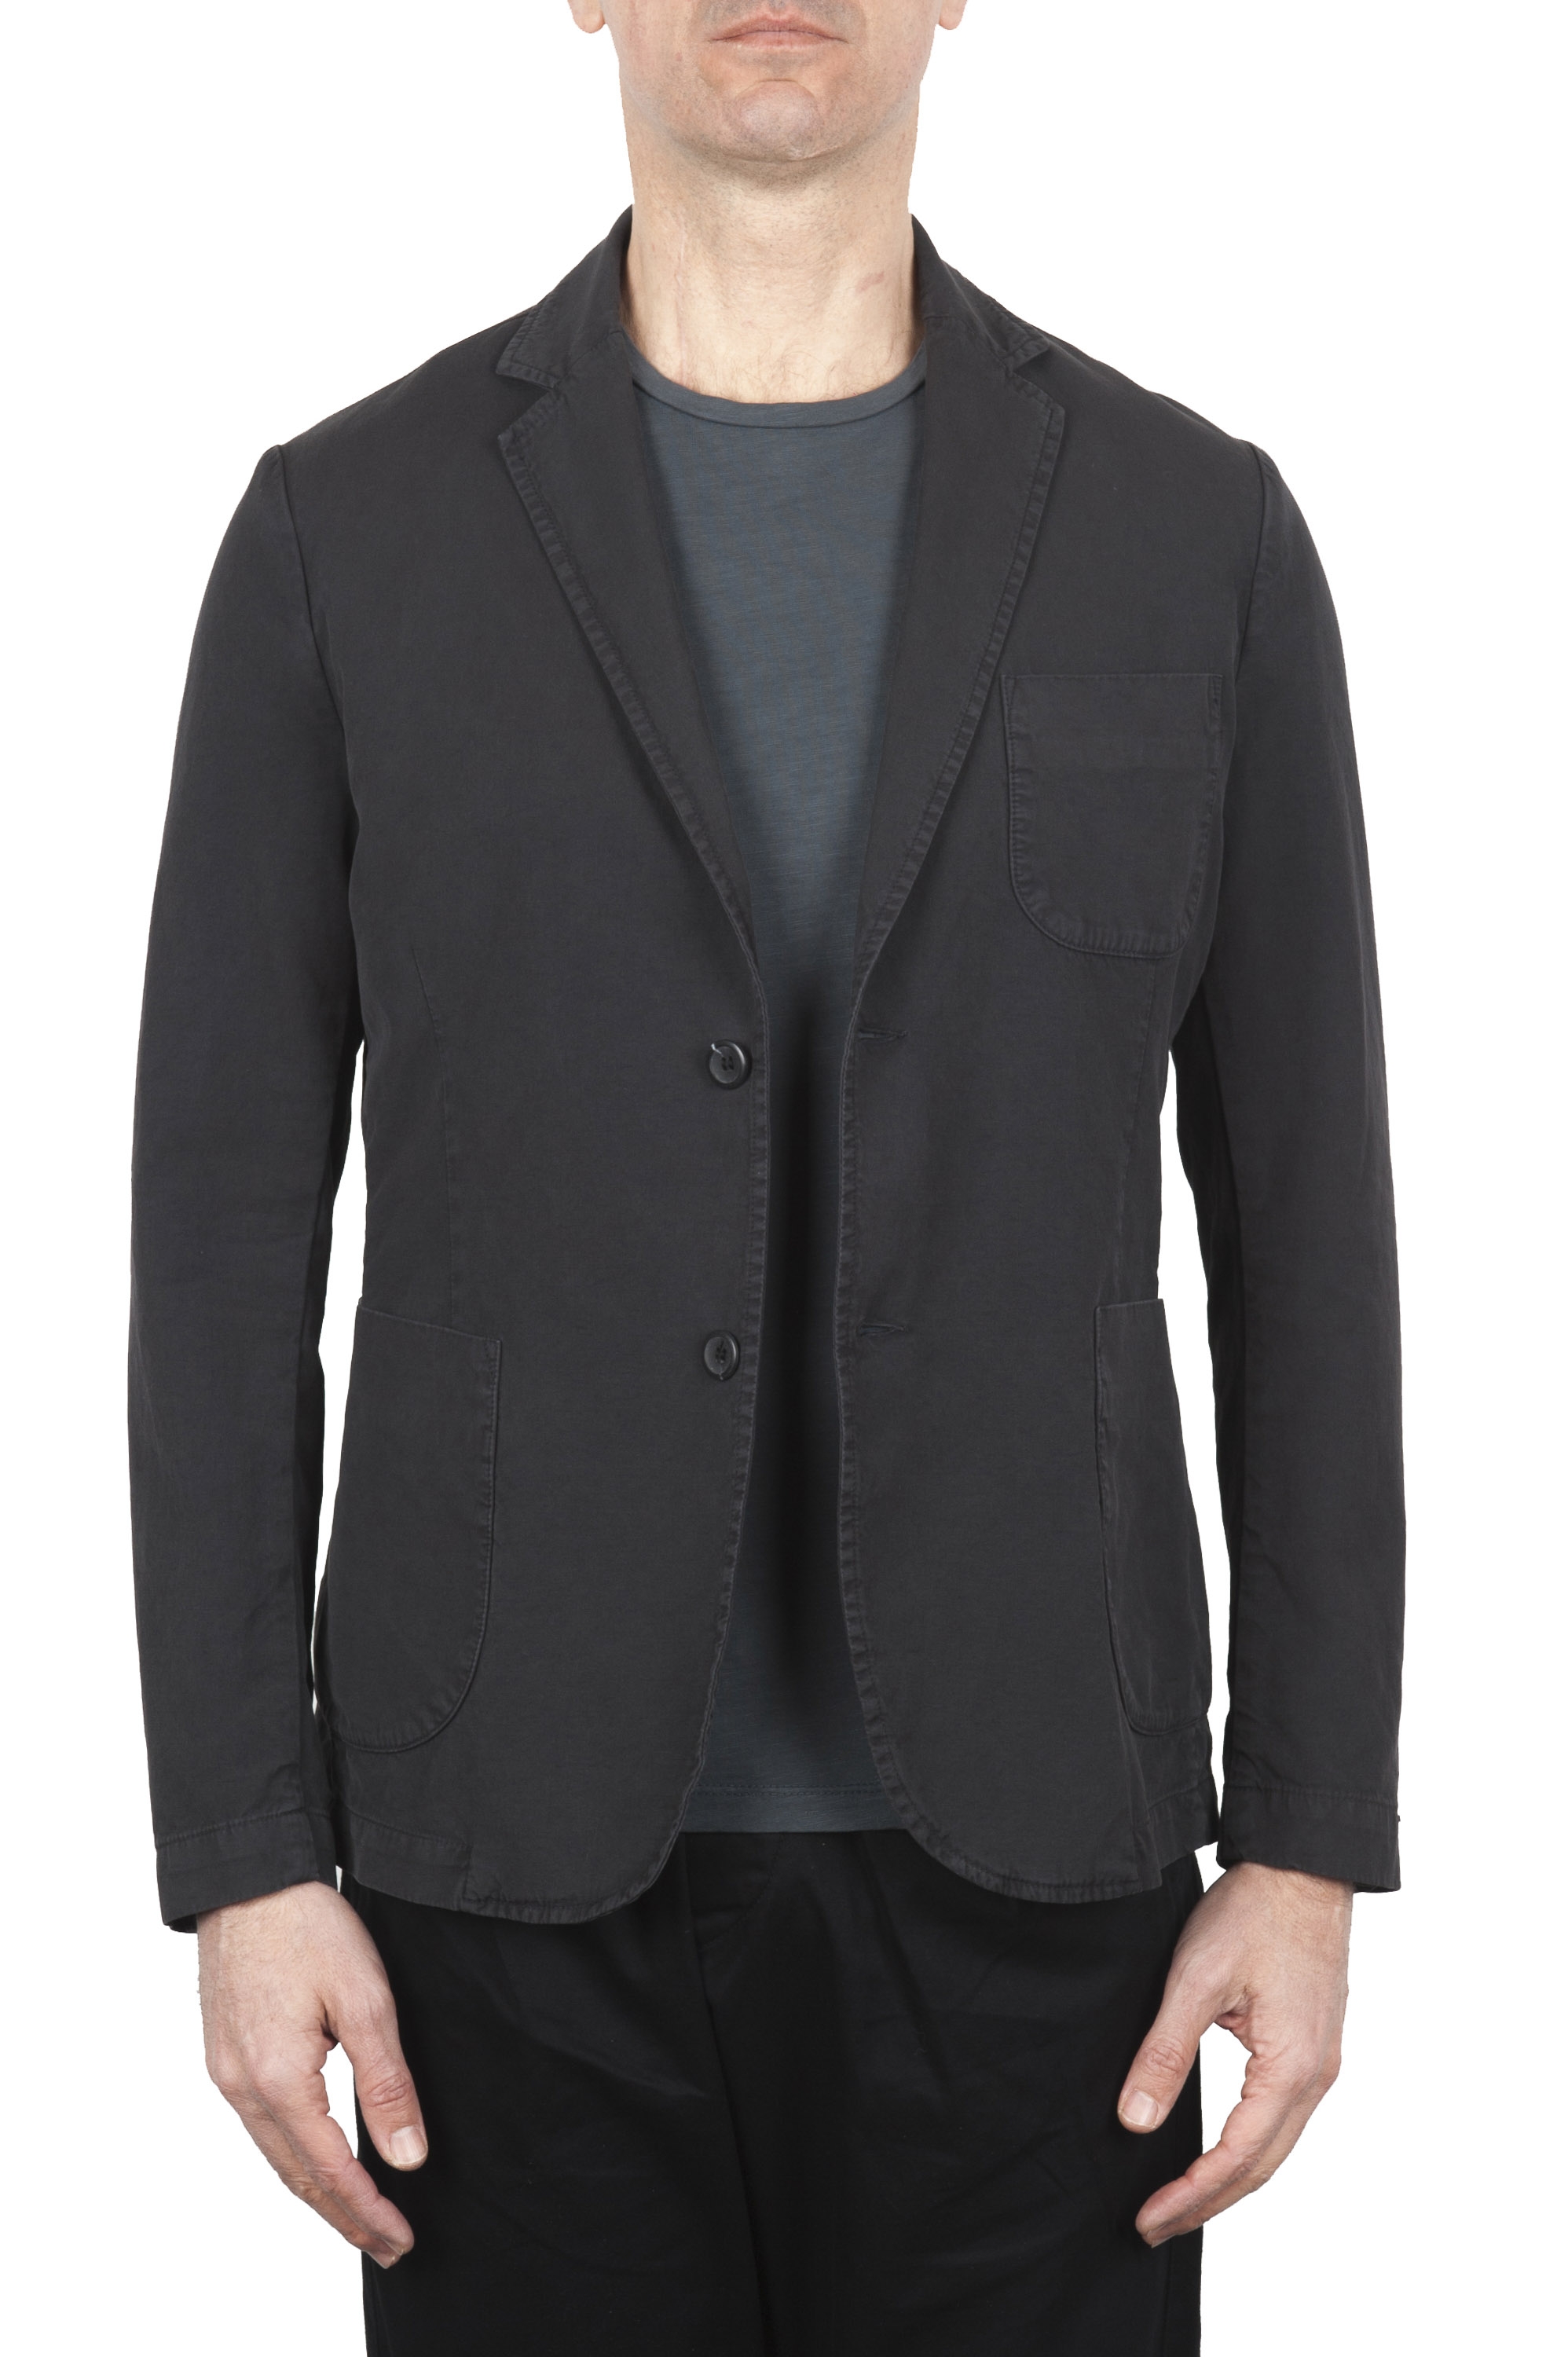 SBU 01730 Dark grey cotton sport jacket unconstructed and unlined 01